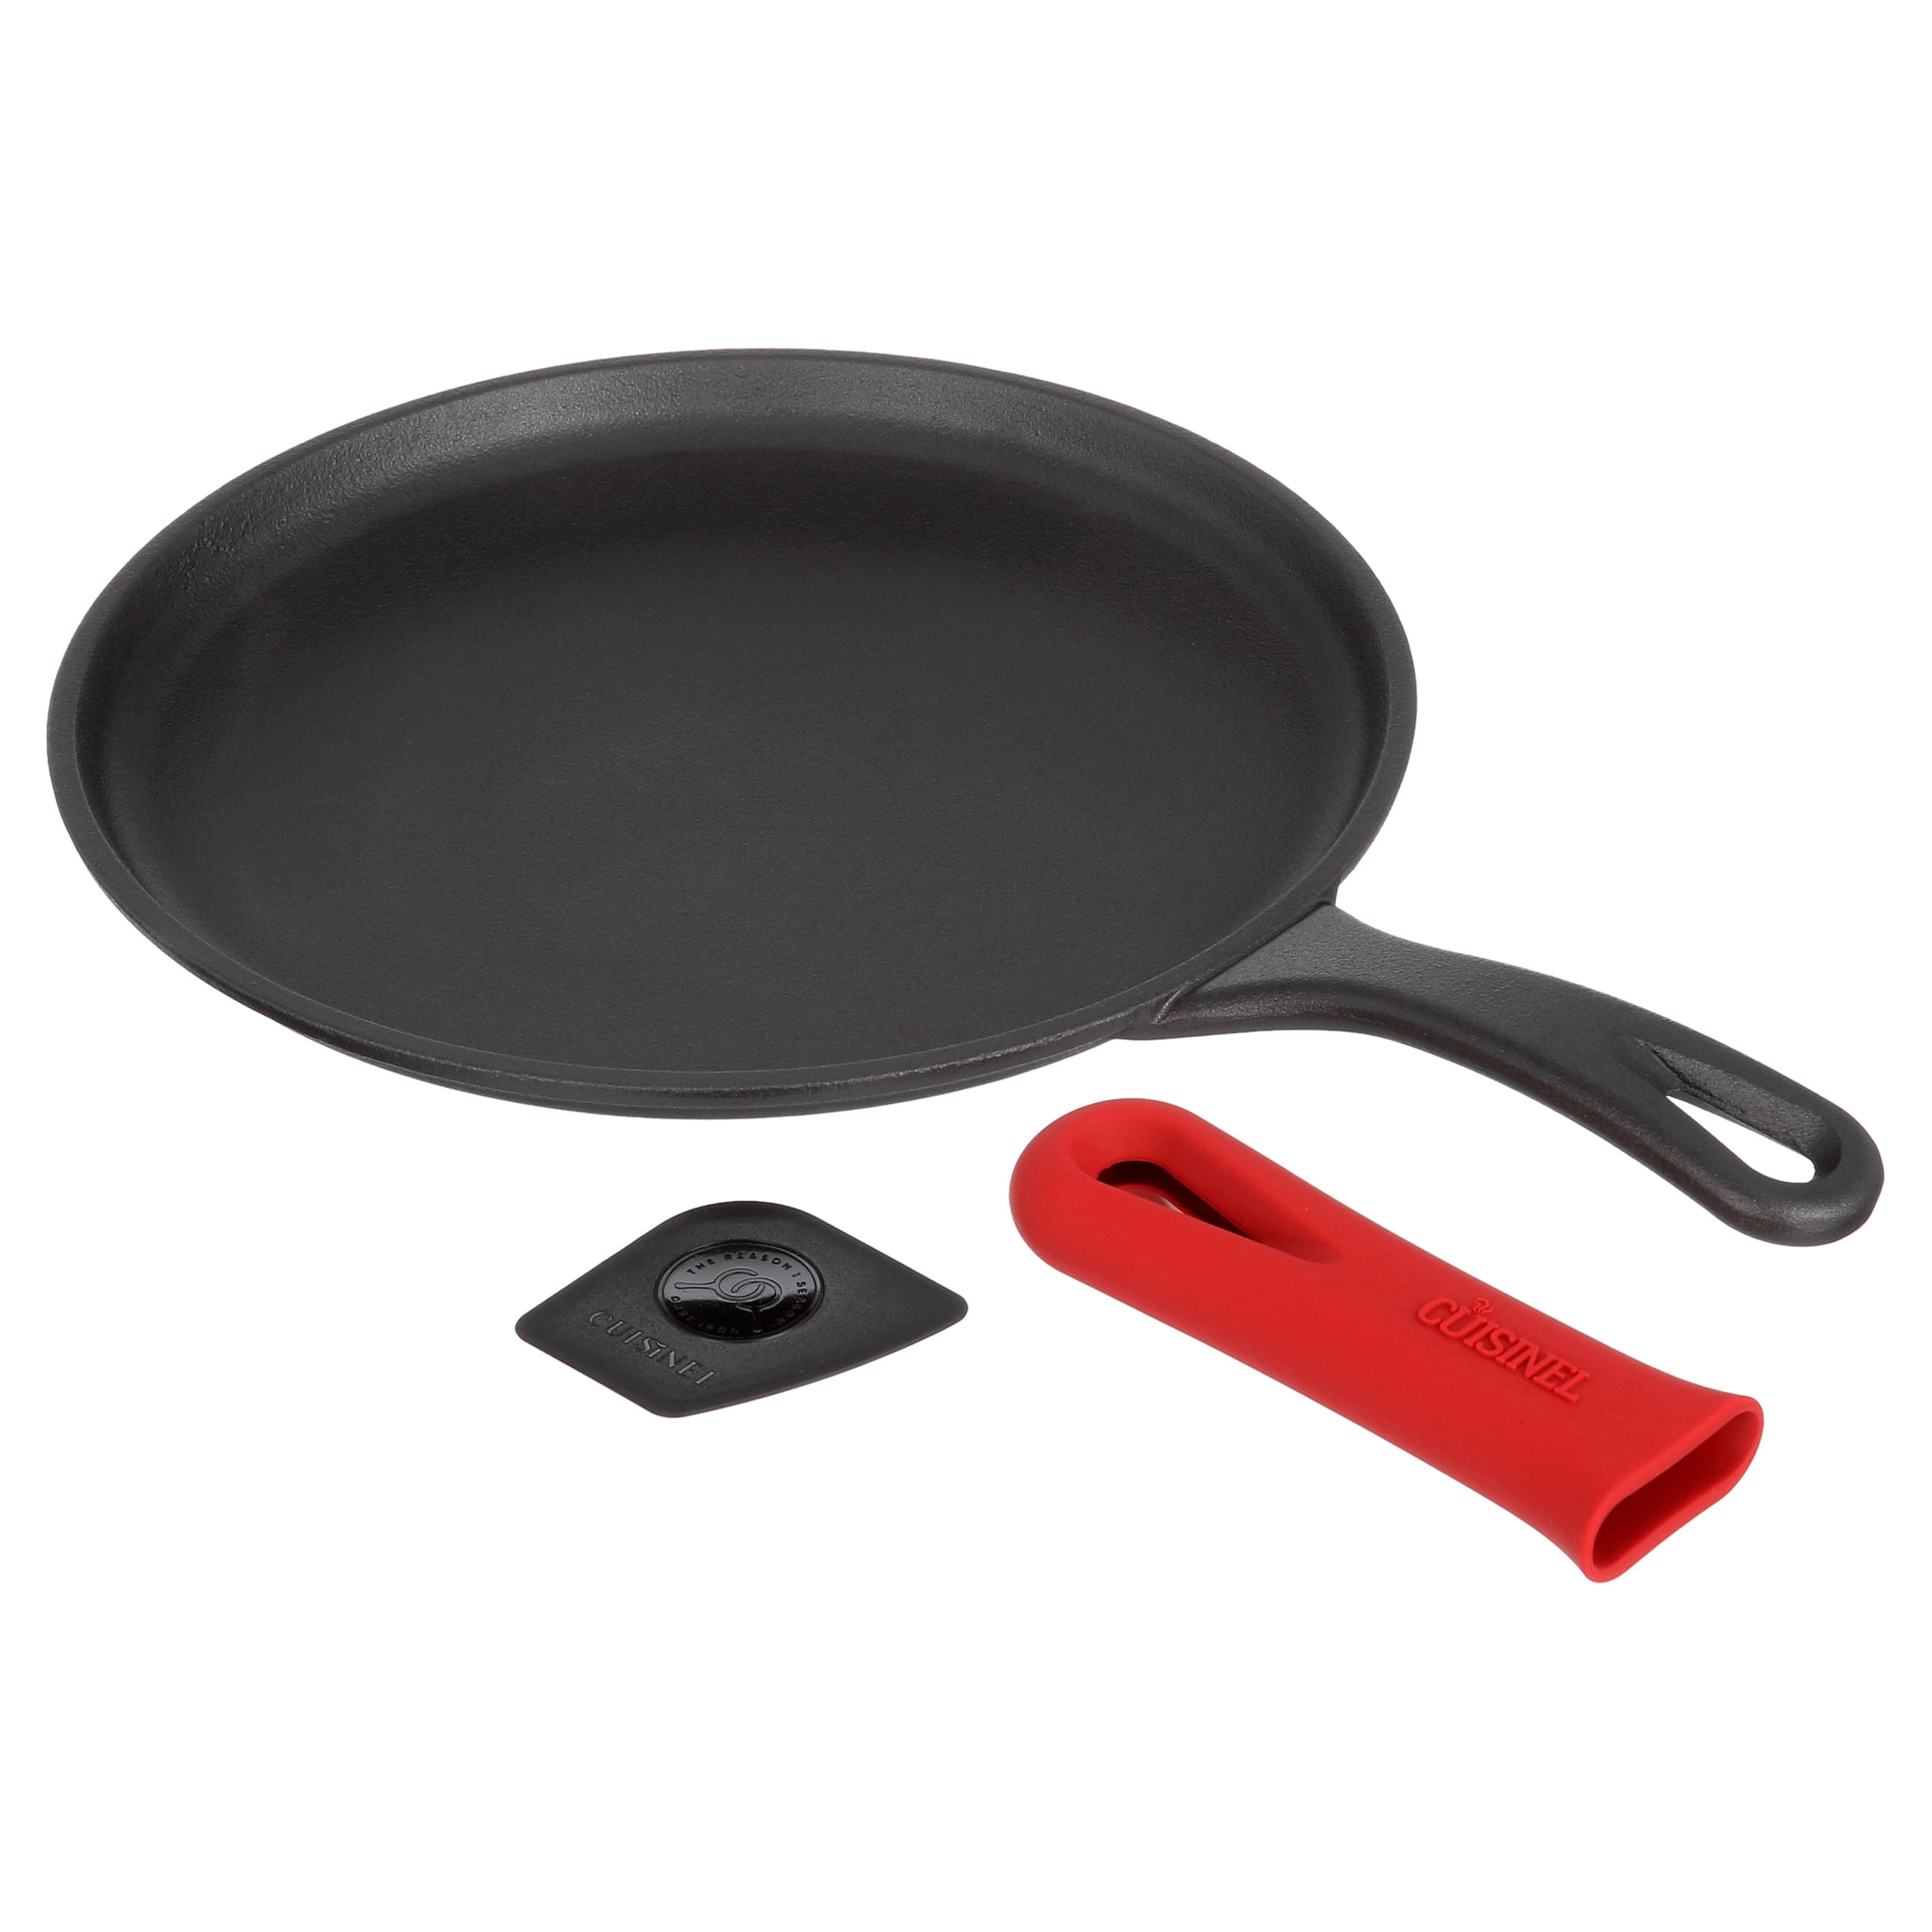 Cuisinel Cast Iron Round Griddle – 10.5” Pan